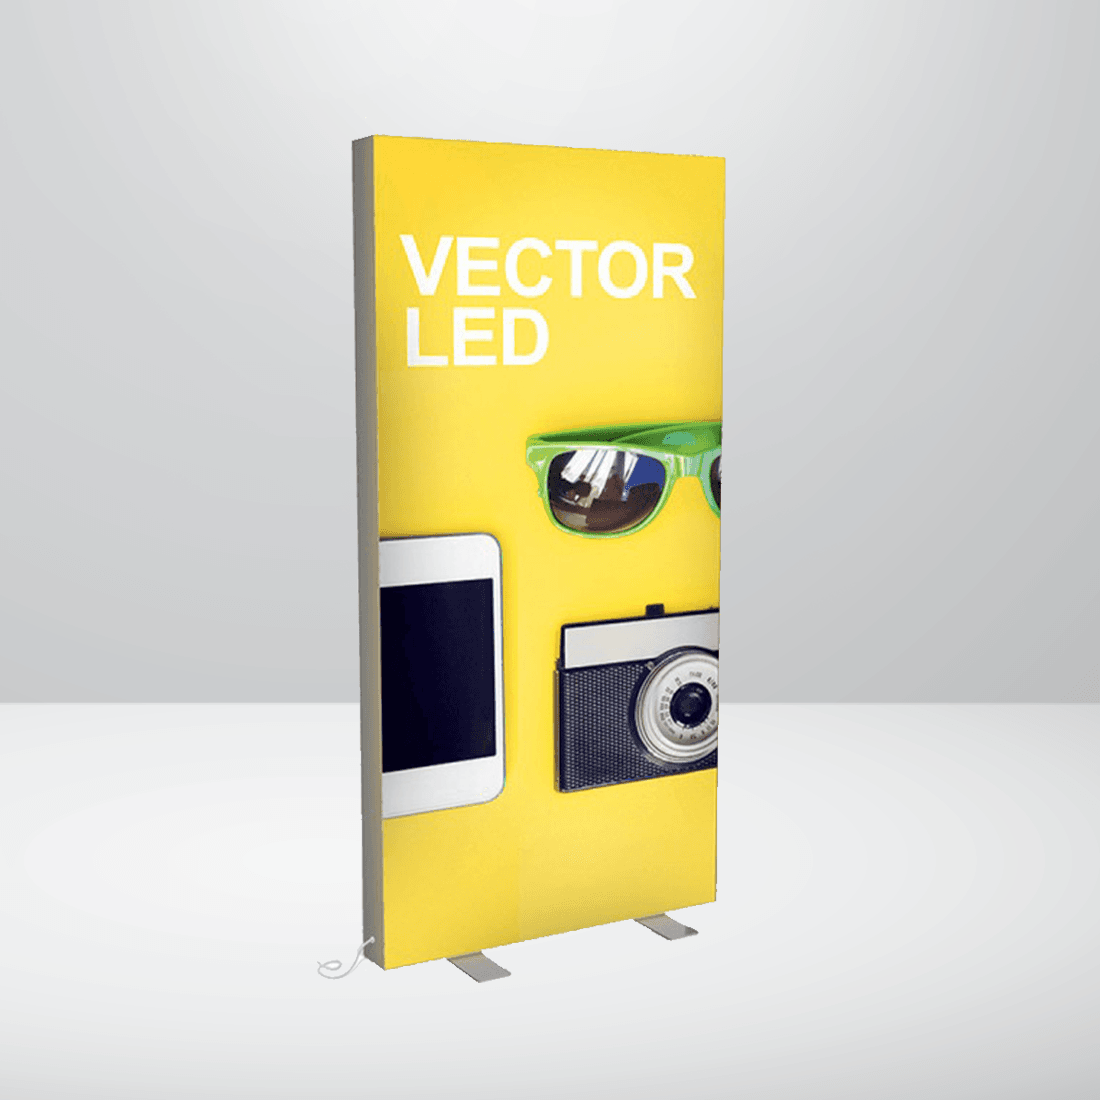 VECTOR LED 125 mm: 1000x2000x125 mm / VLB 125